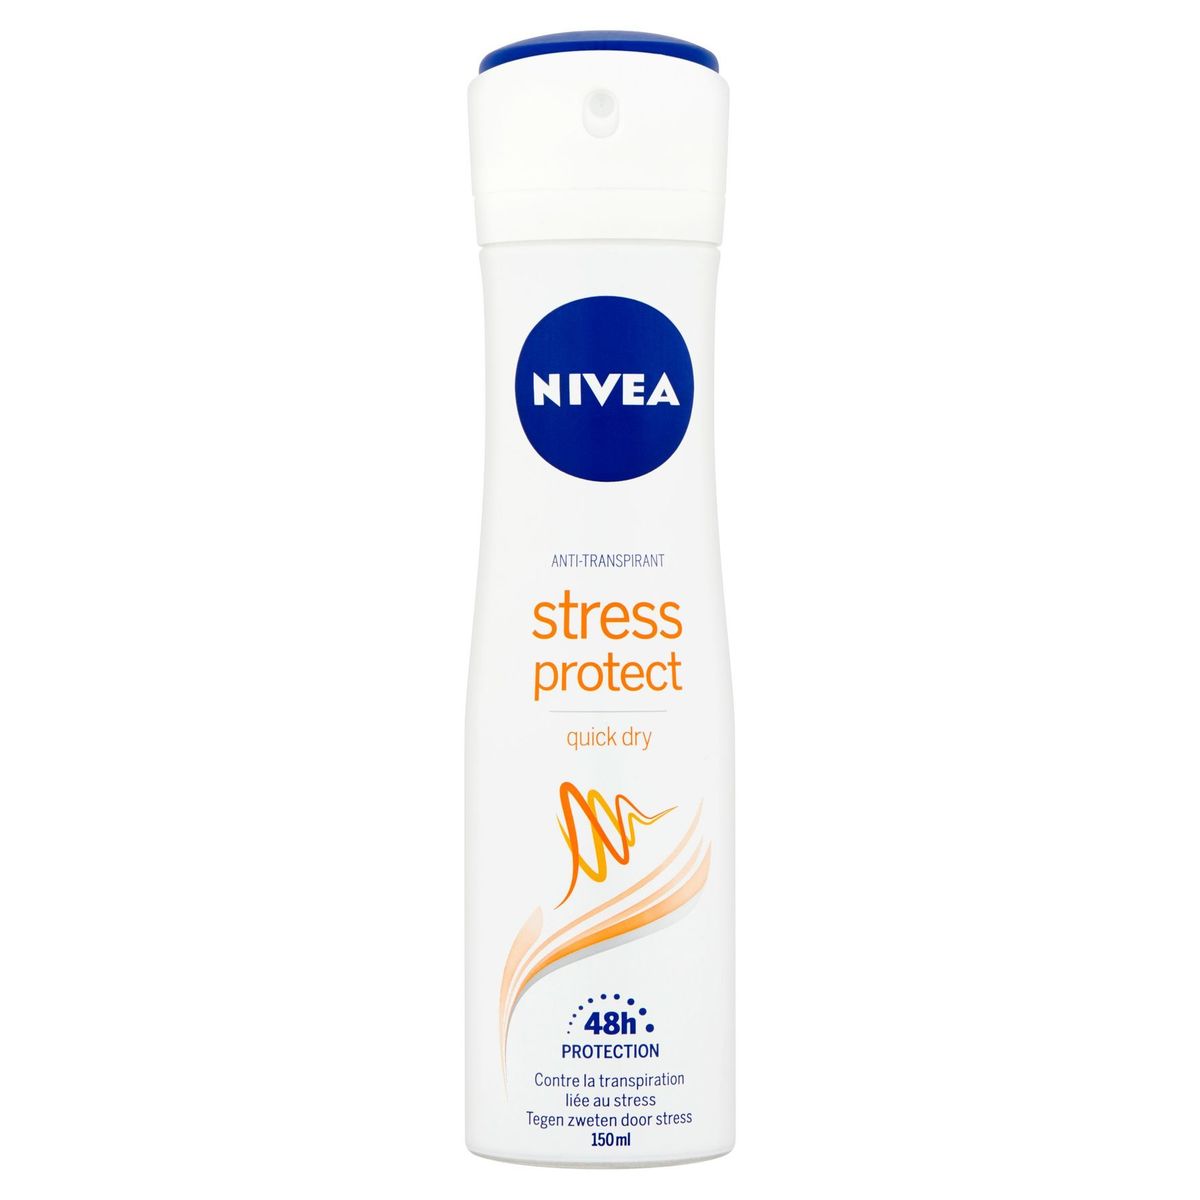 Nivea Anti-Transpirant Stress Protect 48h Protection 150 ml